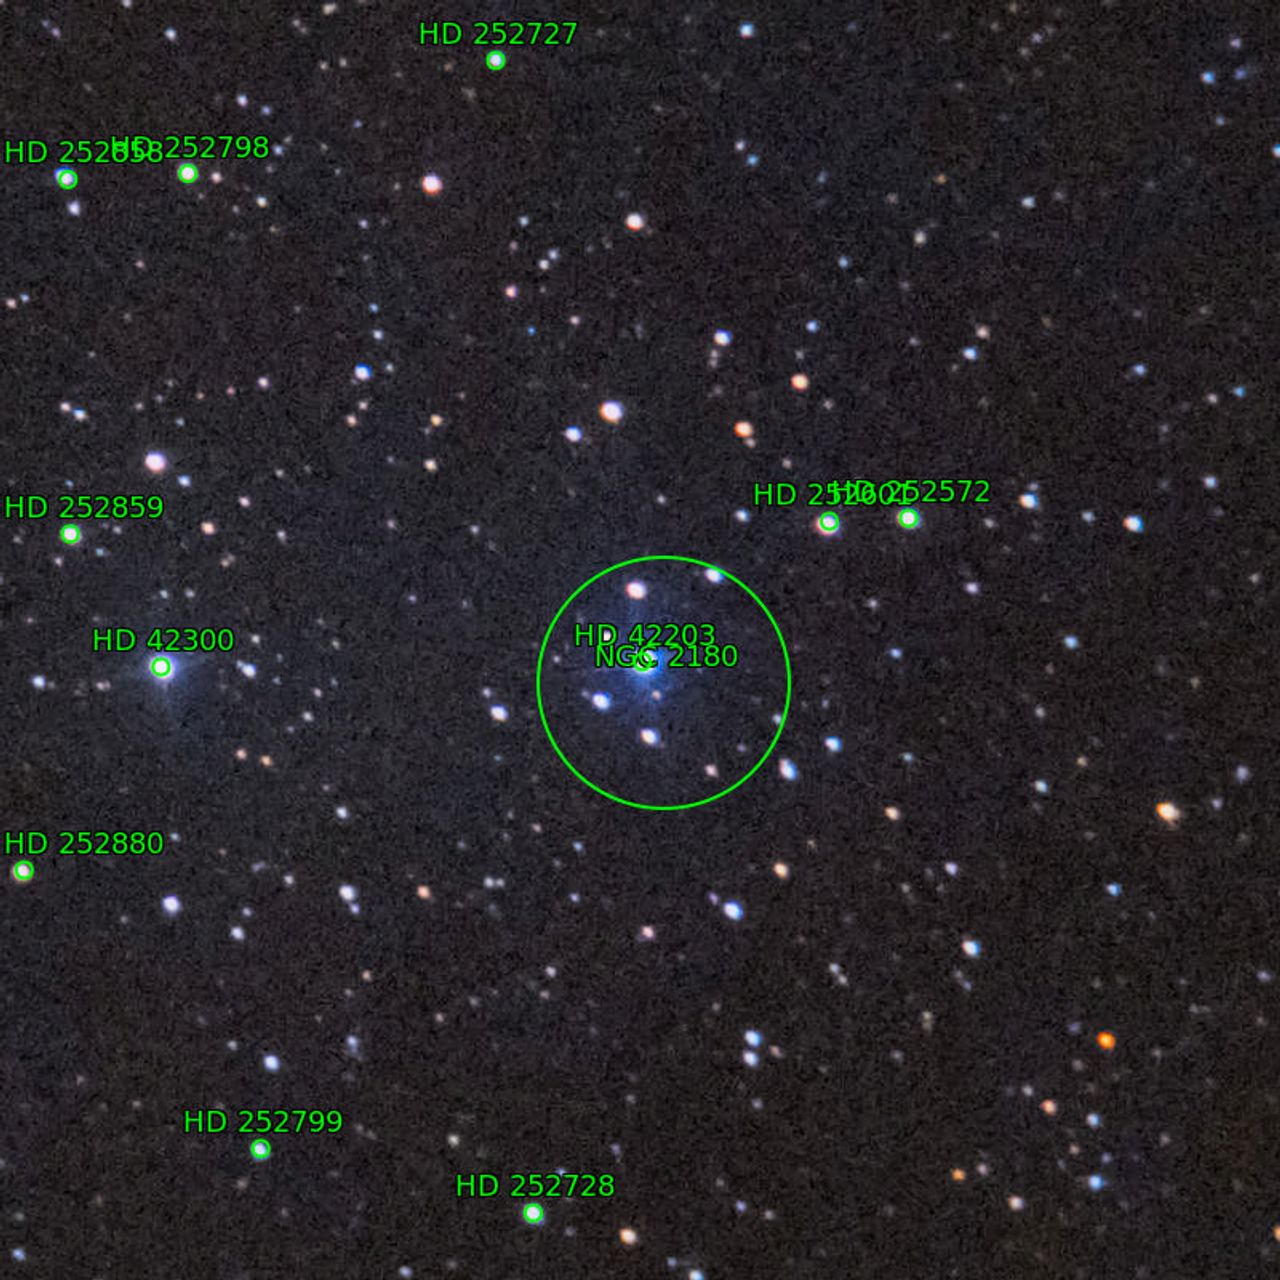 Annotation around NGC2180